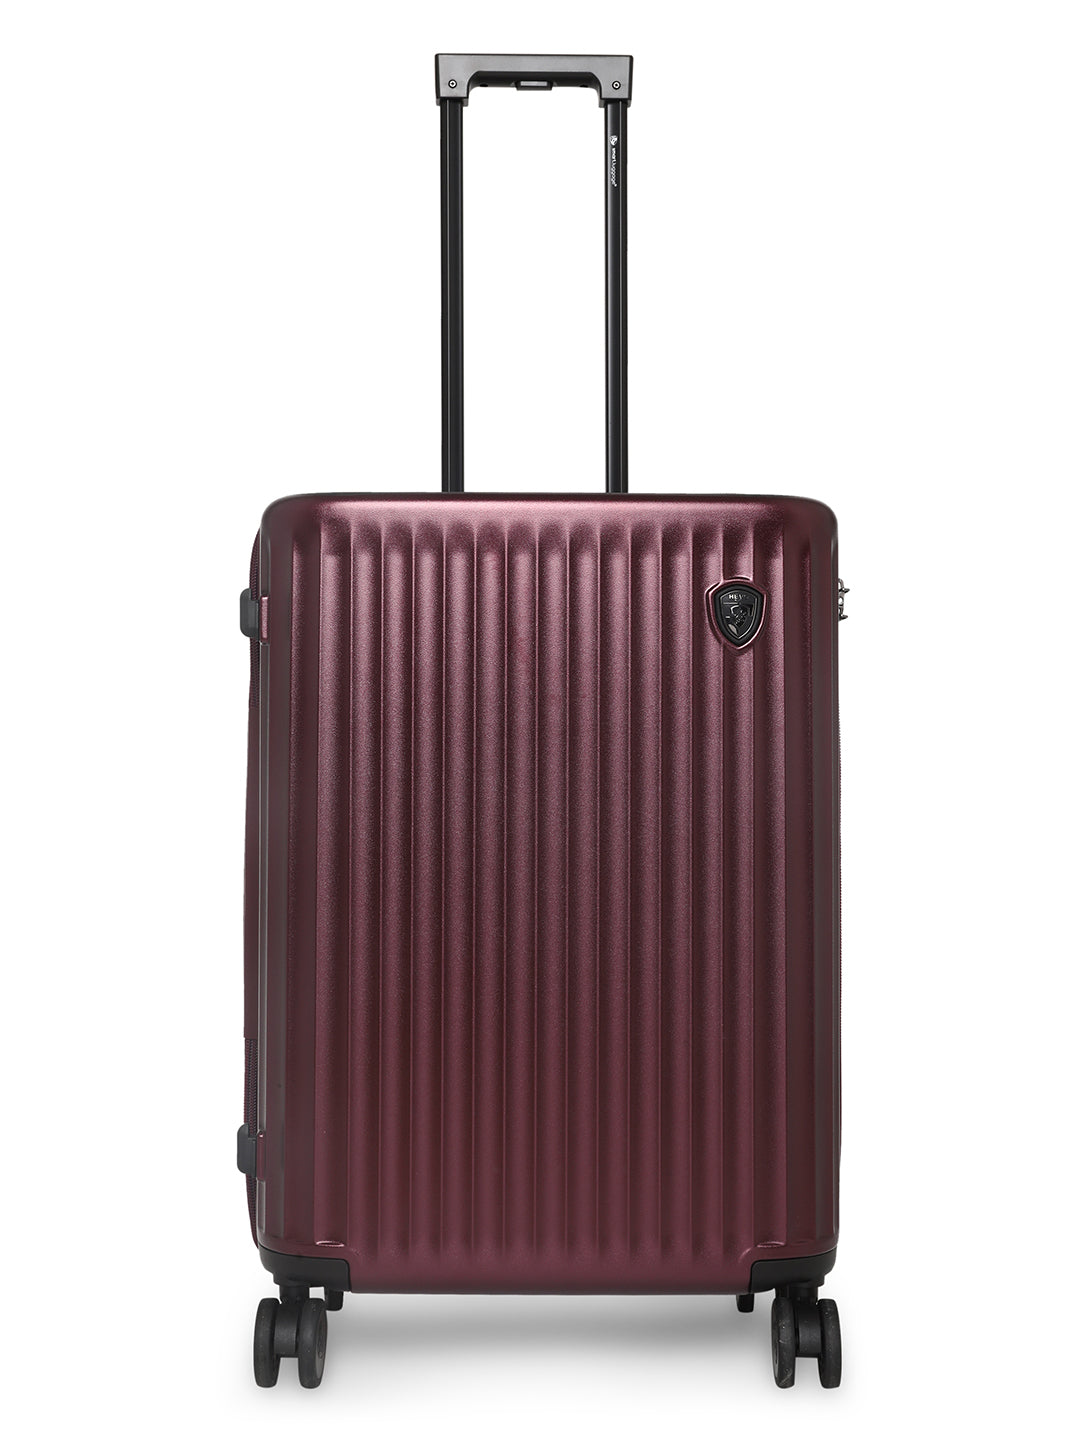 HEYS SMARTLUGGAGE Range Burgundy Color Hard  Luggage